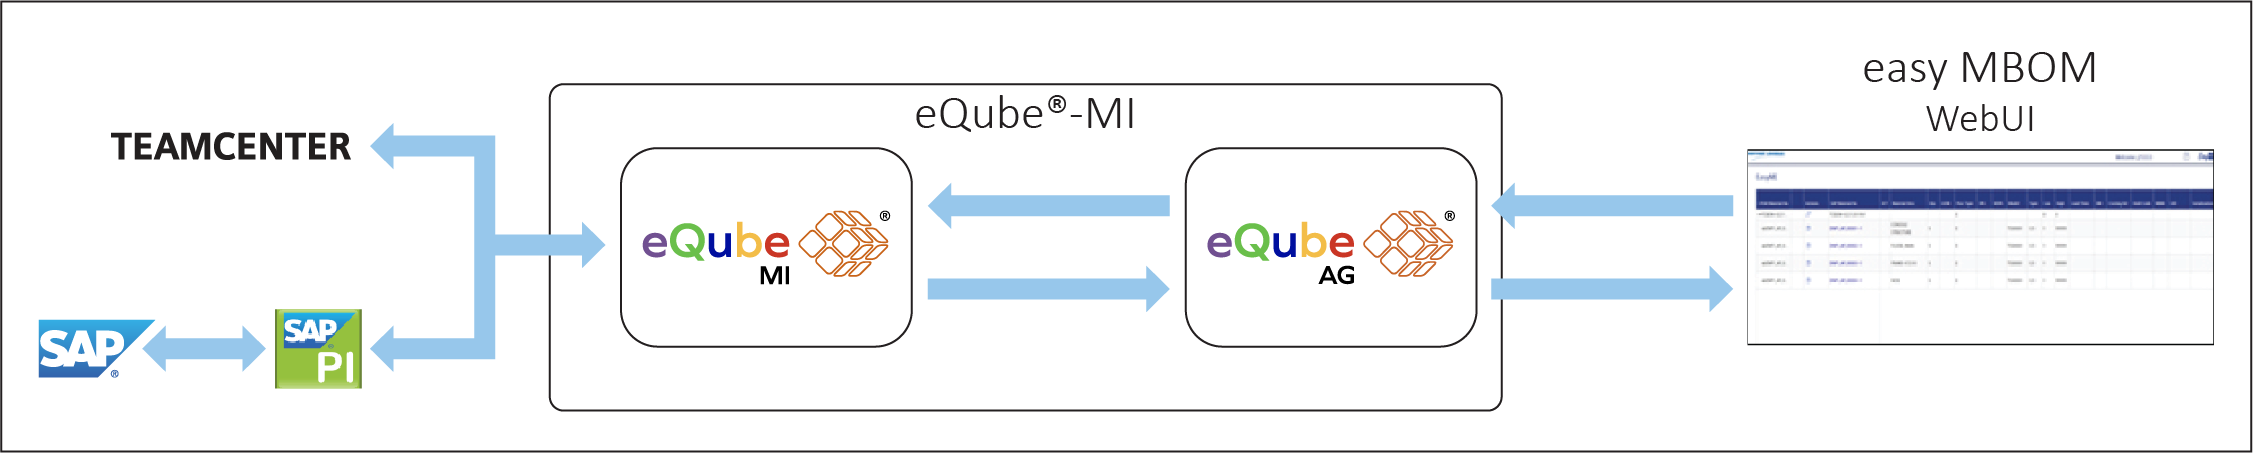 easyMBOM integration | eqube